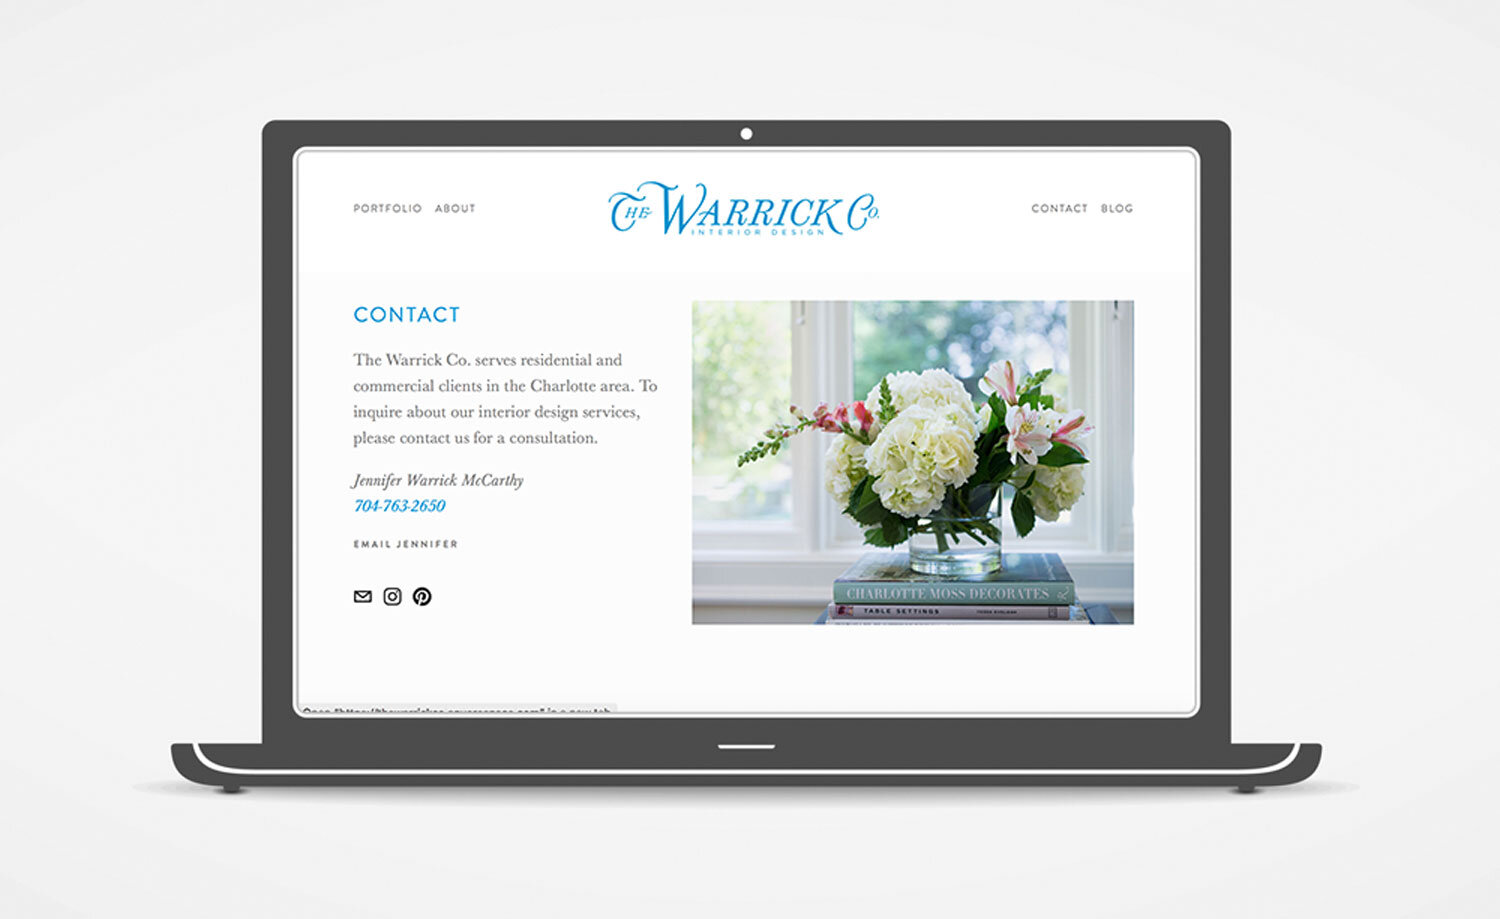 2020-WEB-MOCK-Warrick_Contact1-1500.jpg